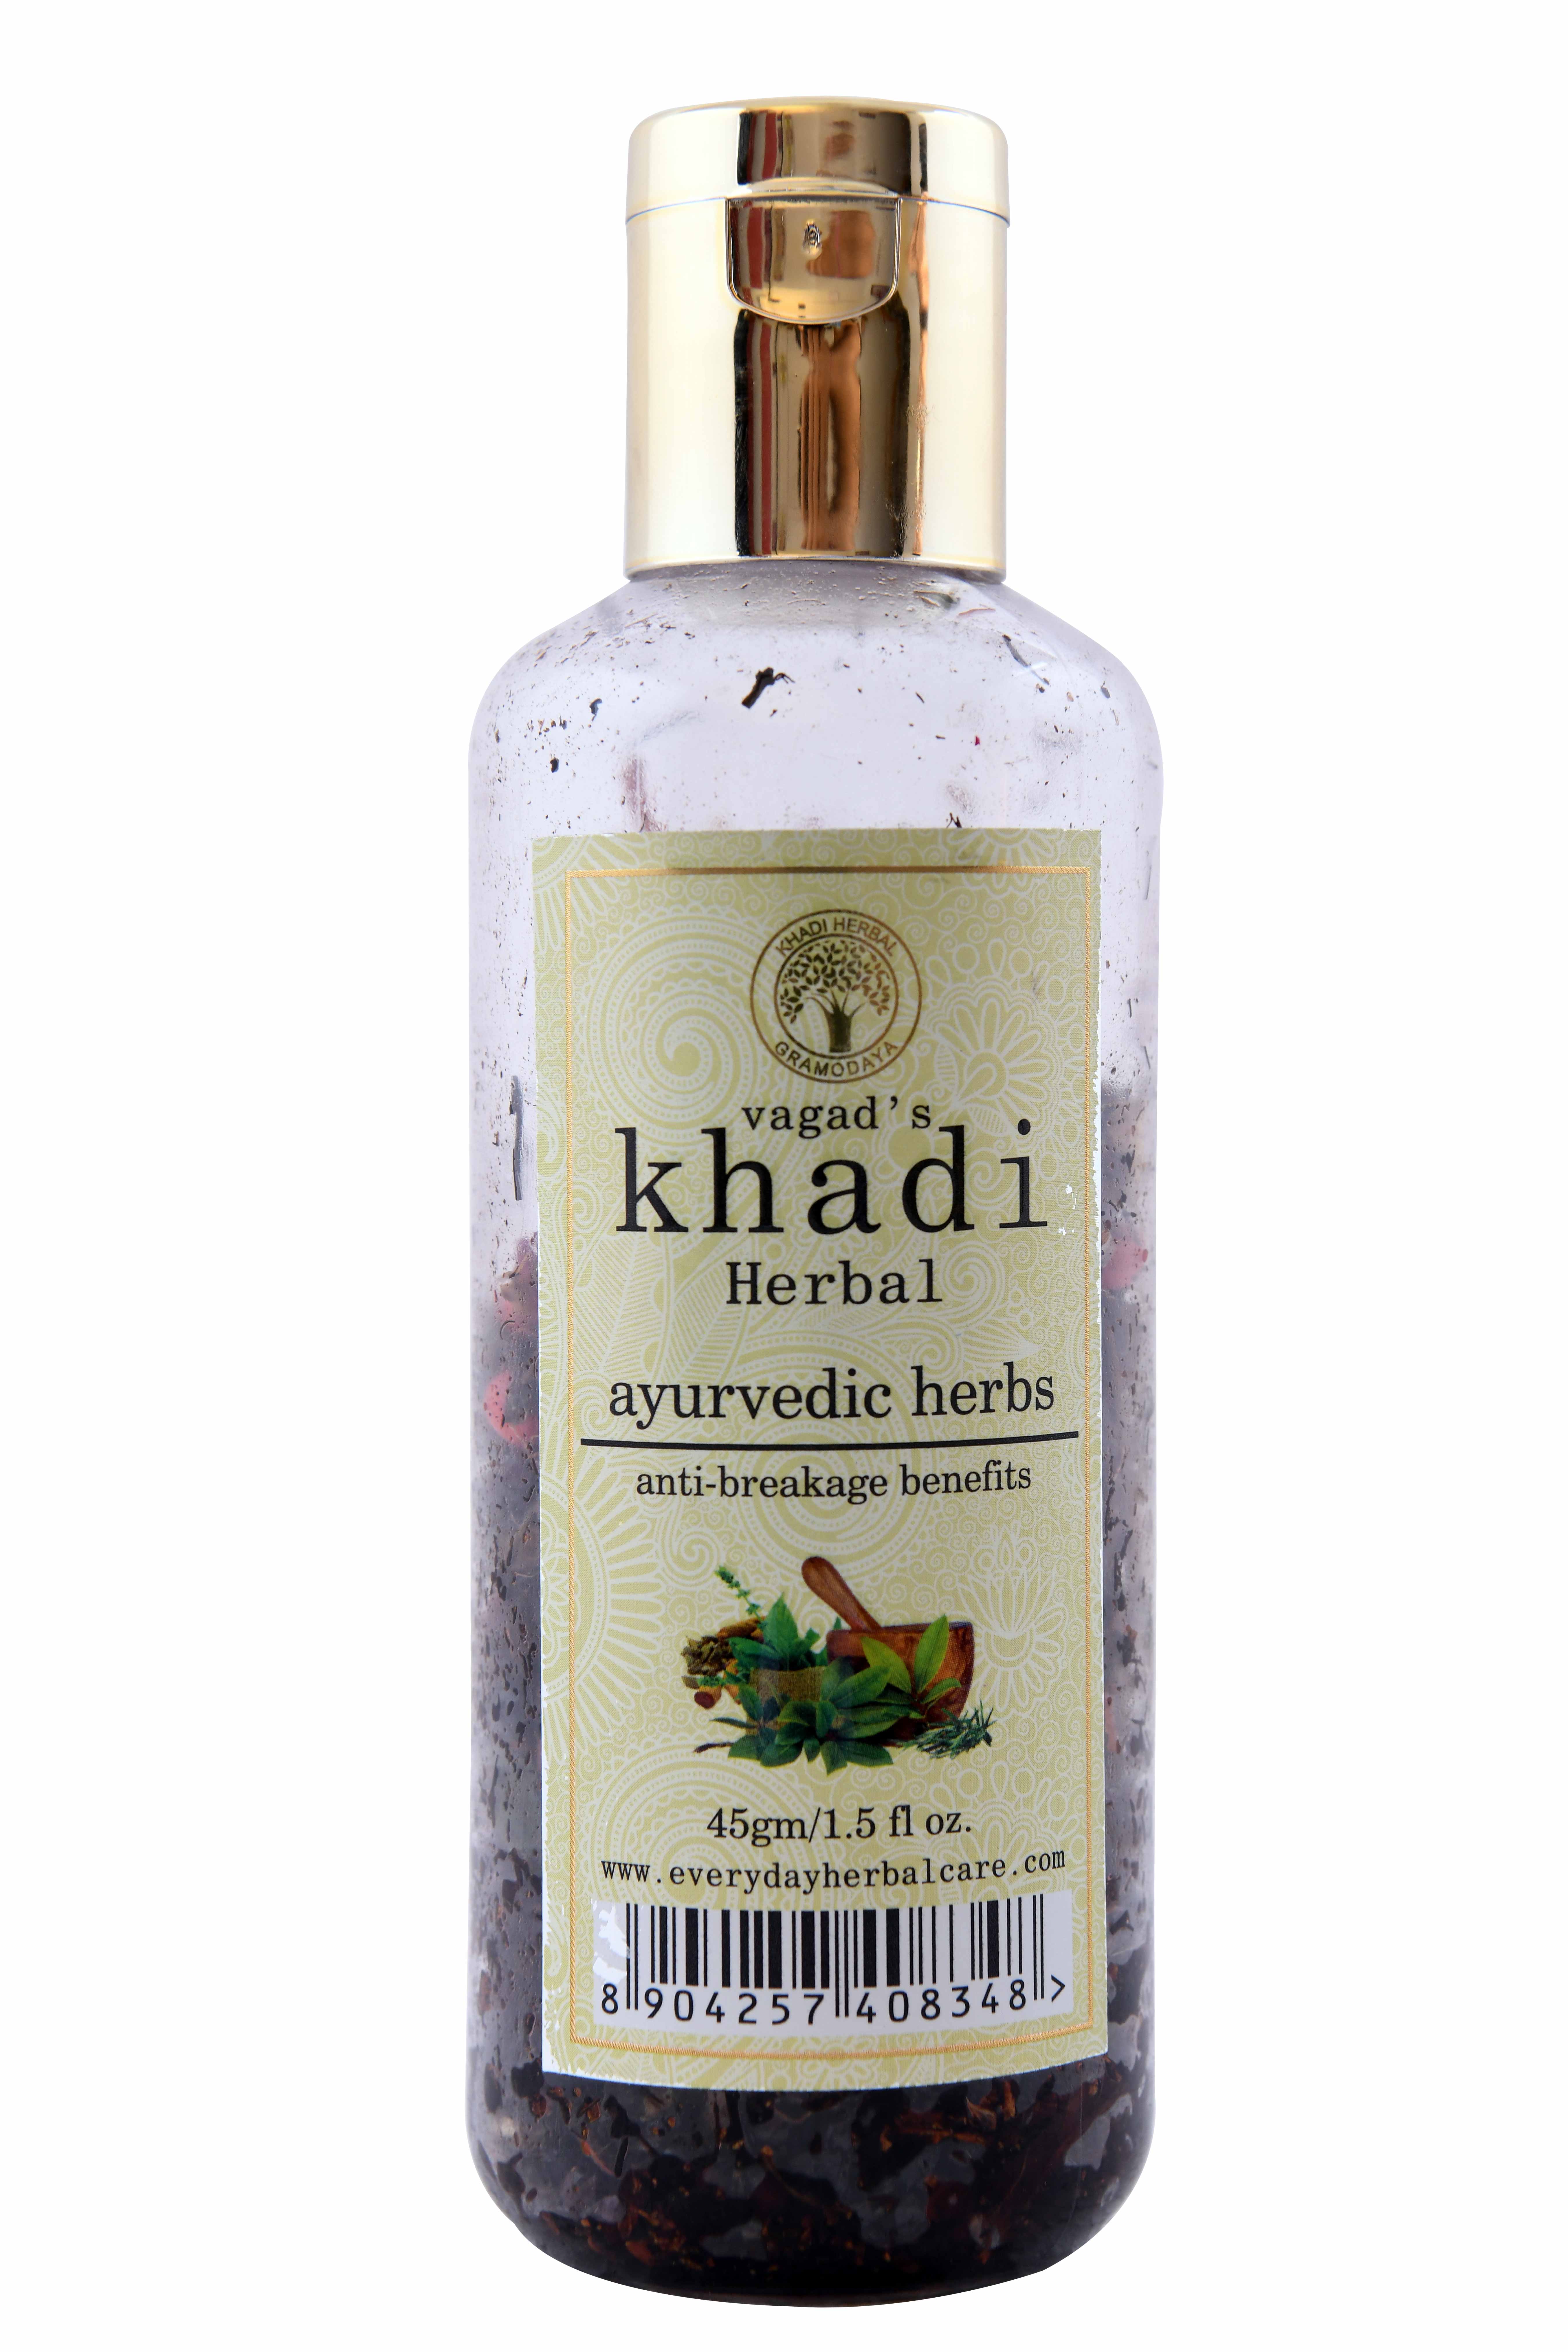 Vagad's Khadi Ayurvedic Herbs